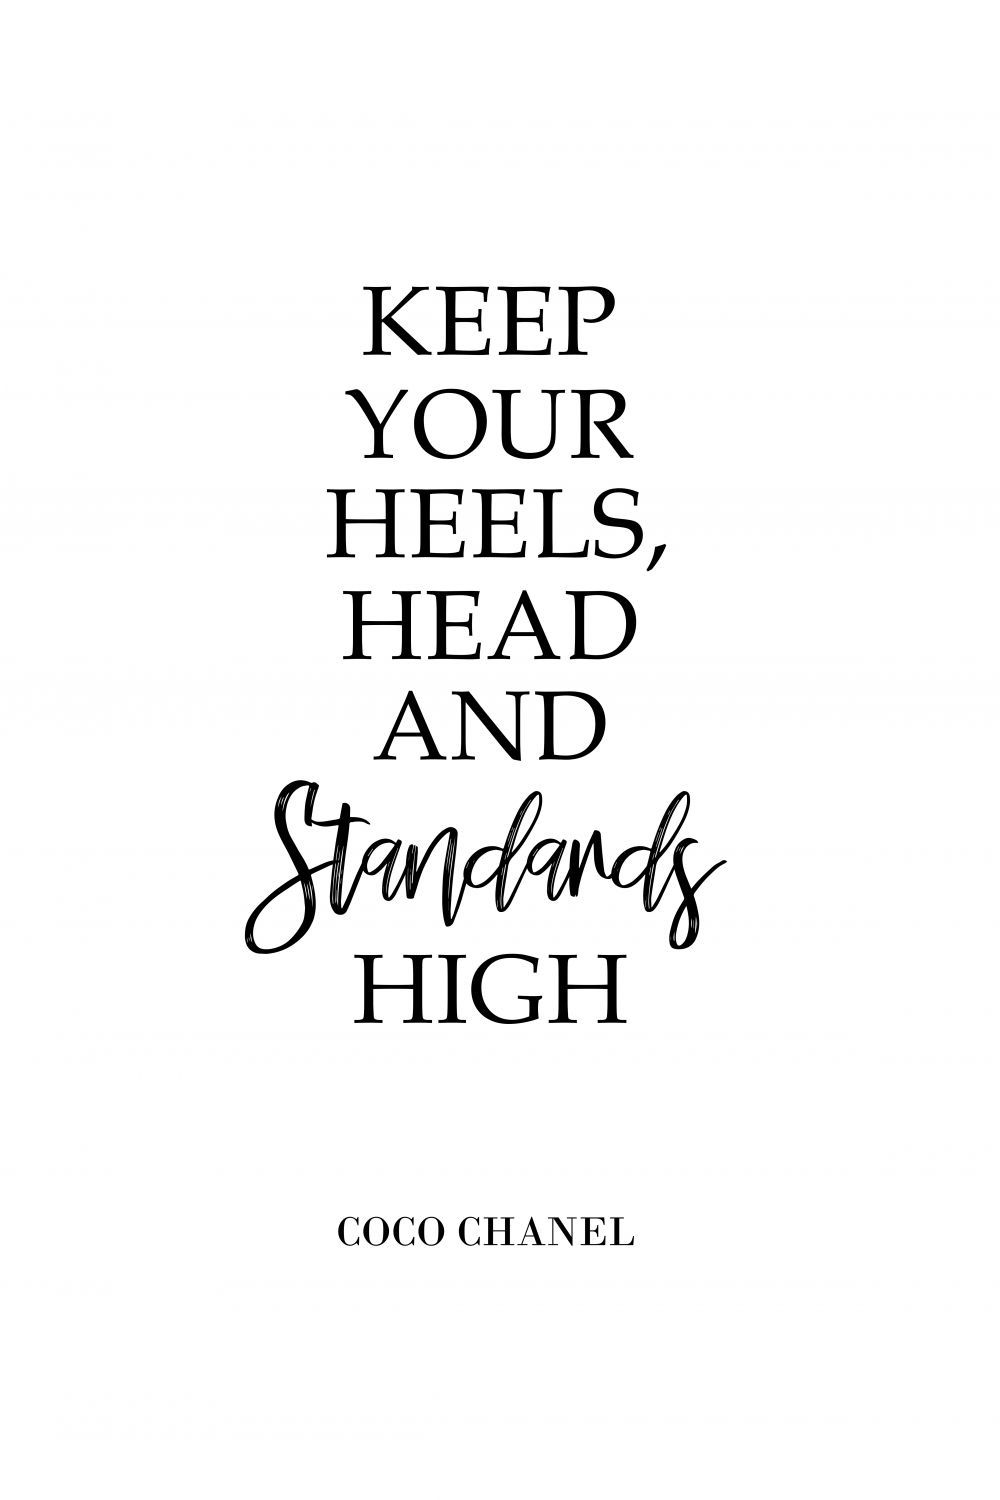 Постер "Keep your heels high"